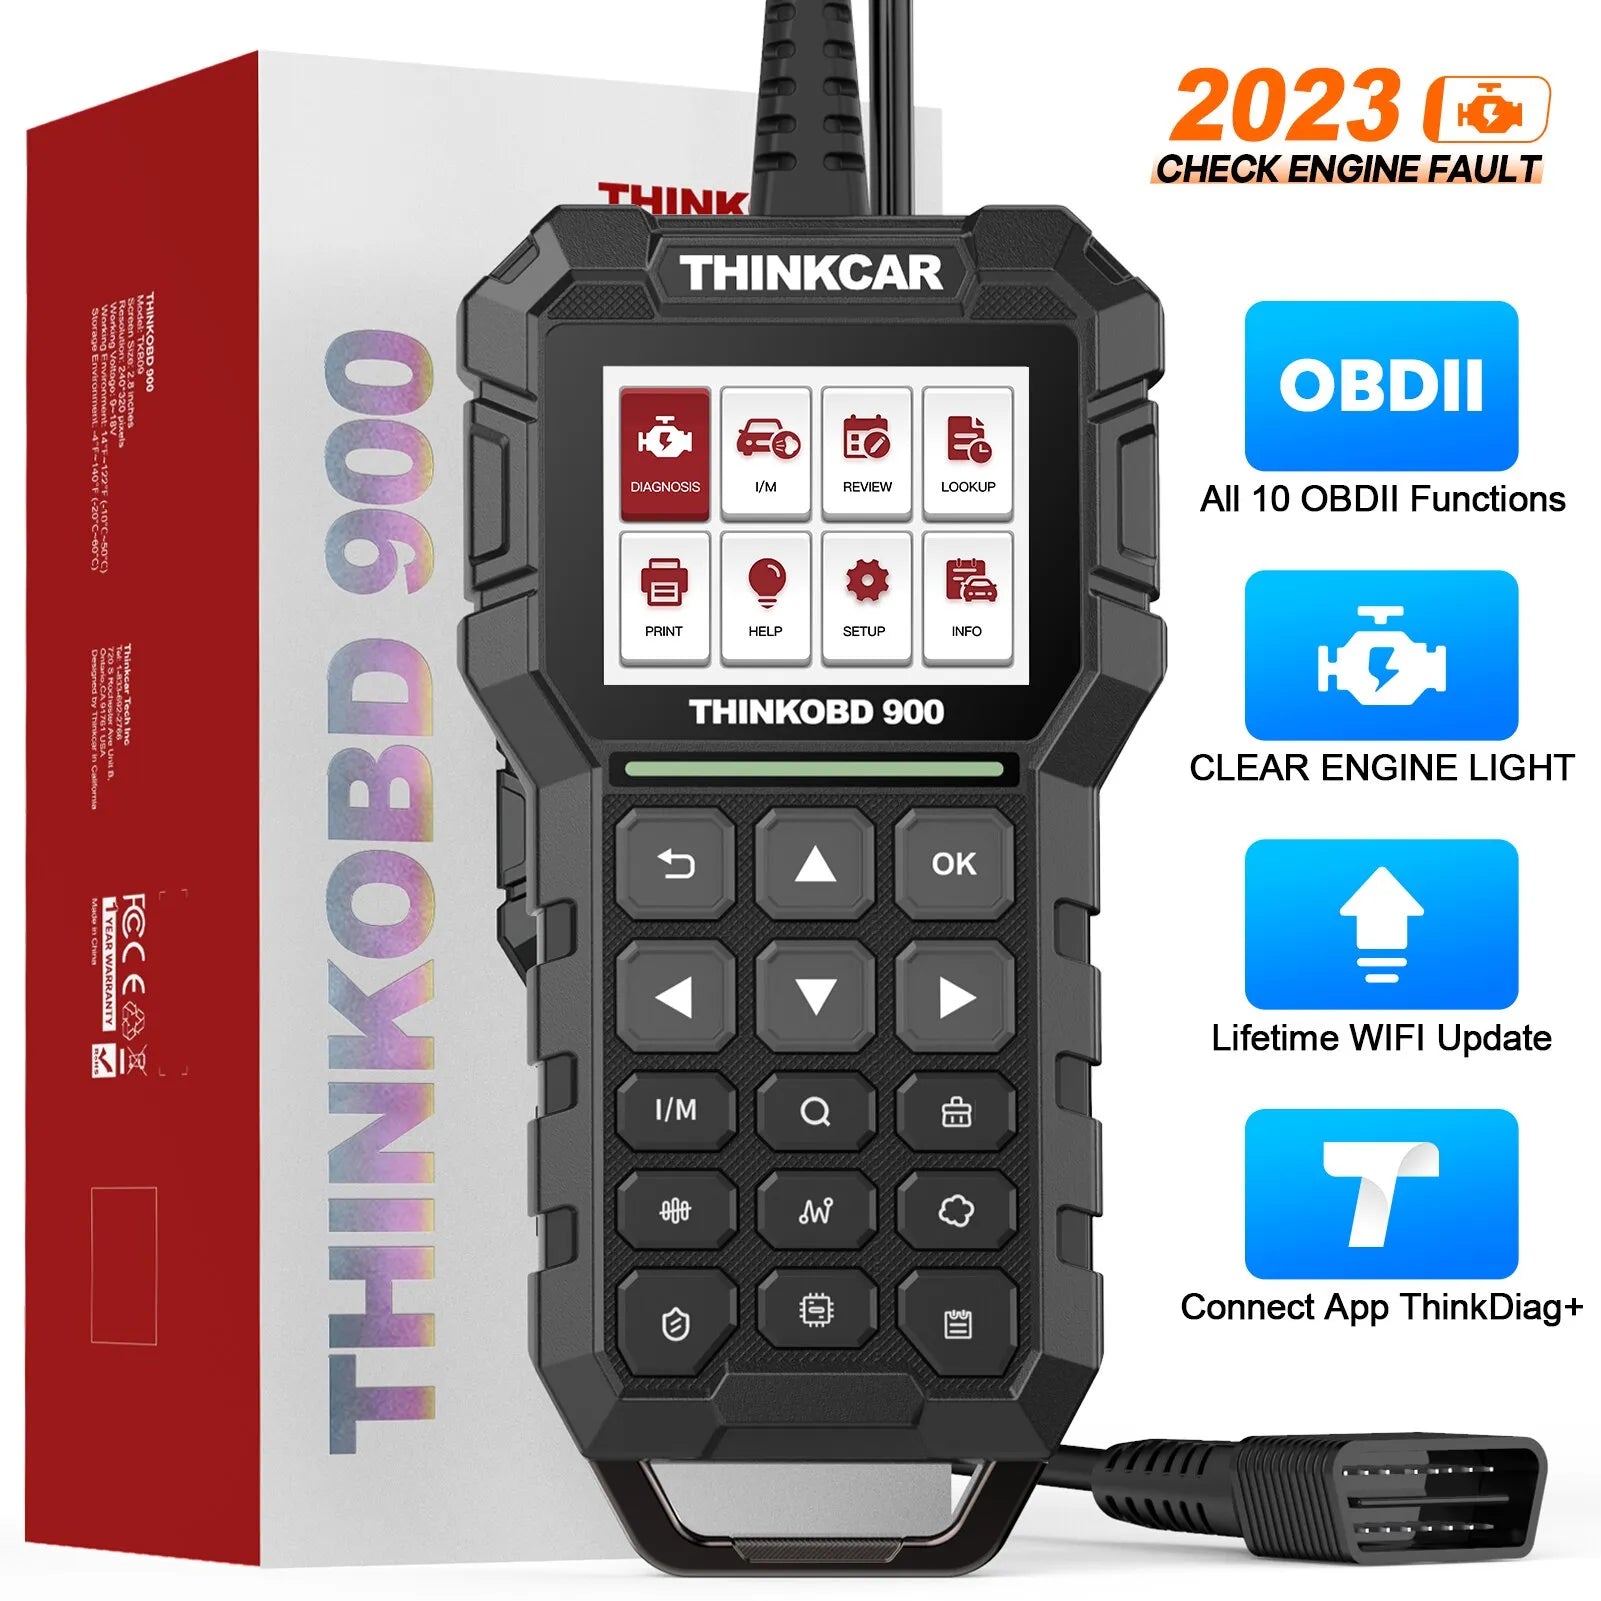 THINKCAR THINKOBD 900 OBD2 Scanner Engine Fault Light Check Code Reader Full OBDII Function Lifetime Free Car Diagnostic Tools